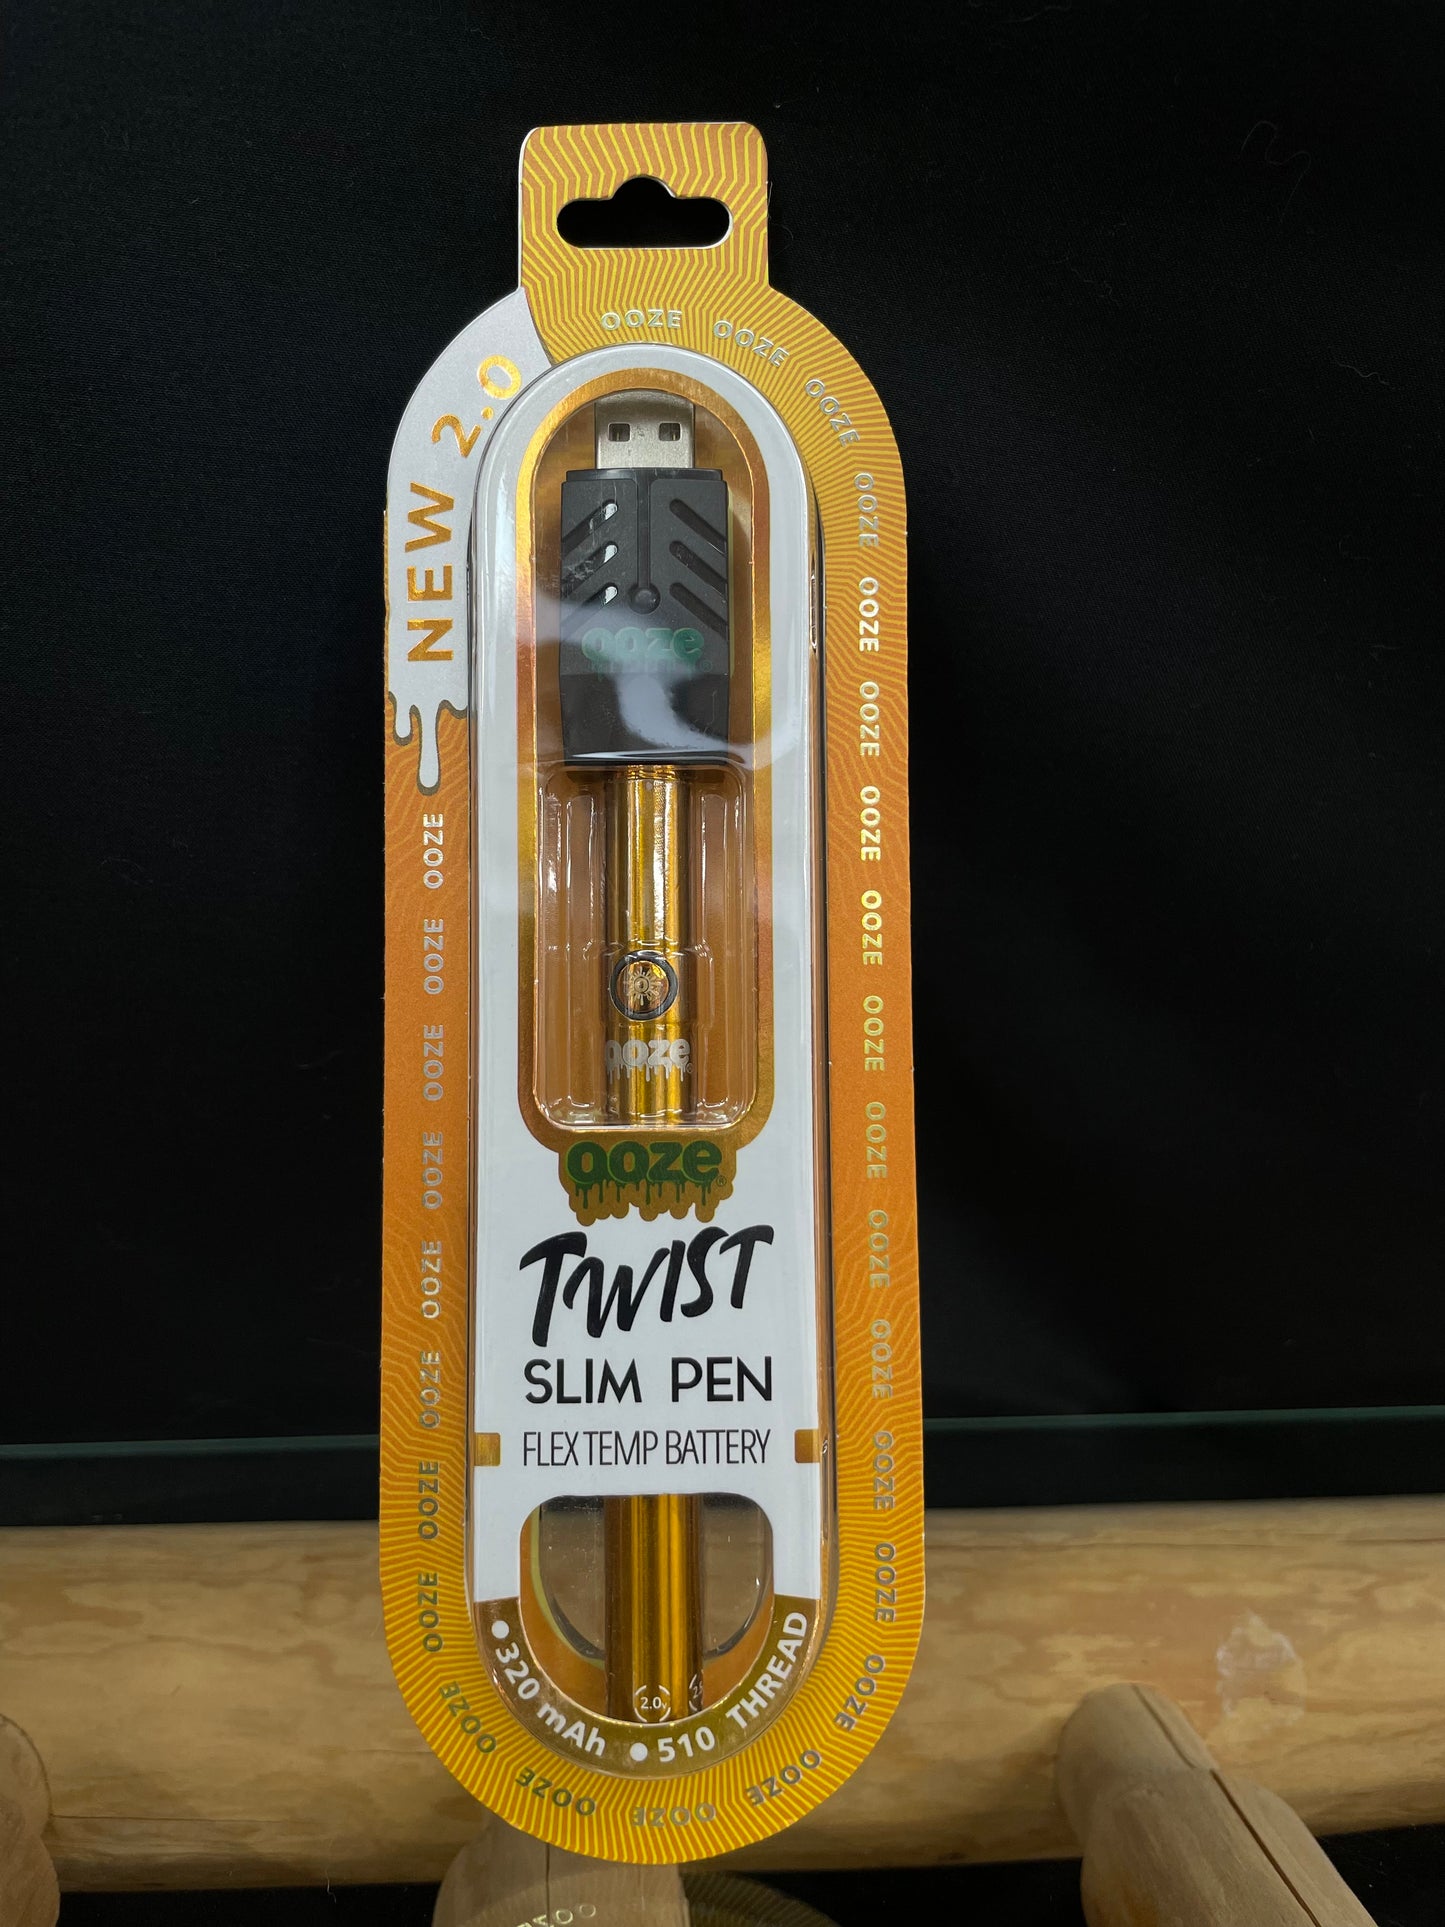 Ooze Flex Temp Twist Slim Pens